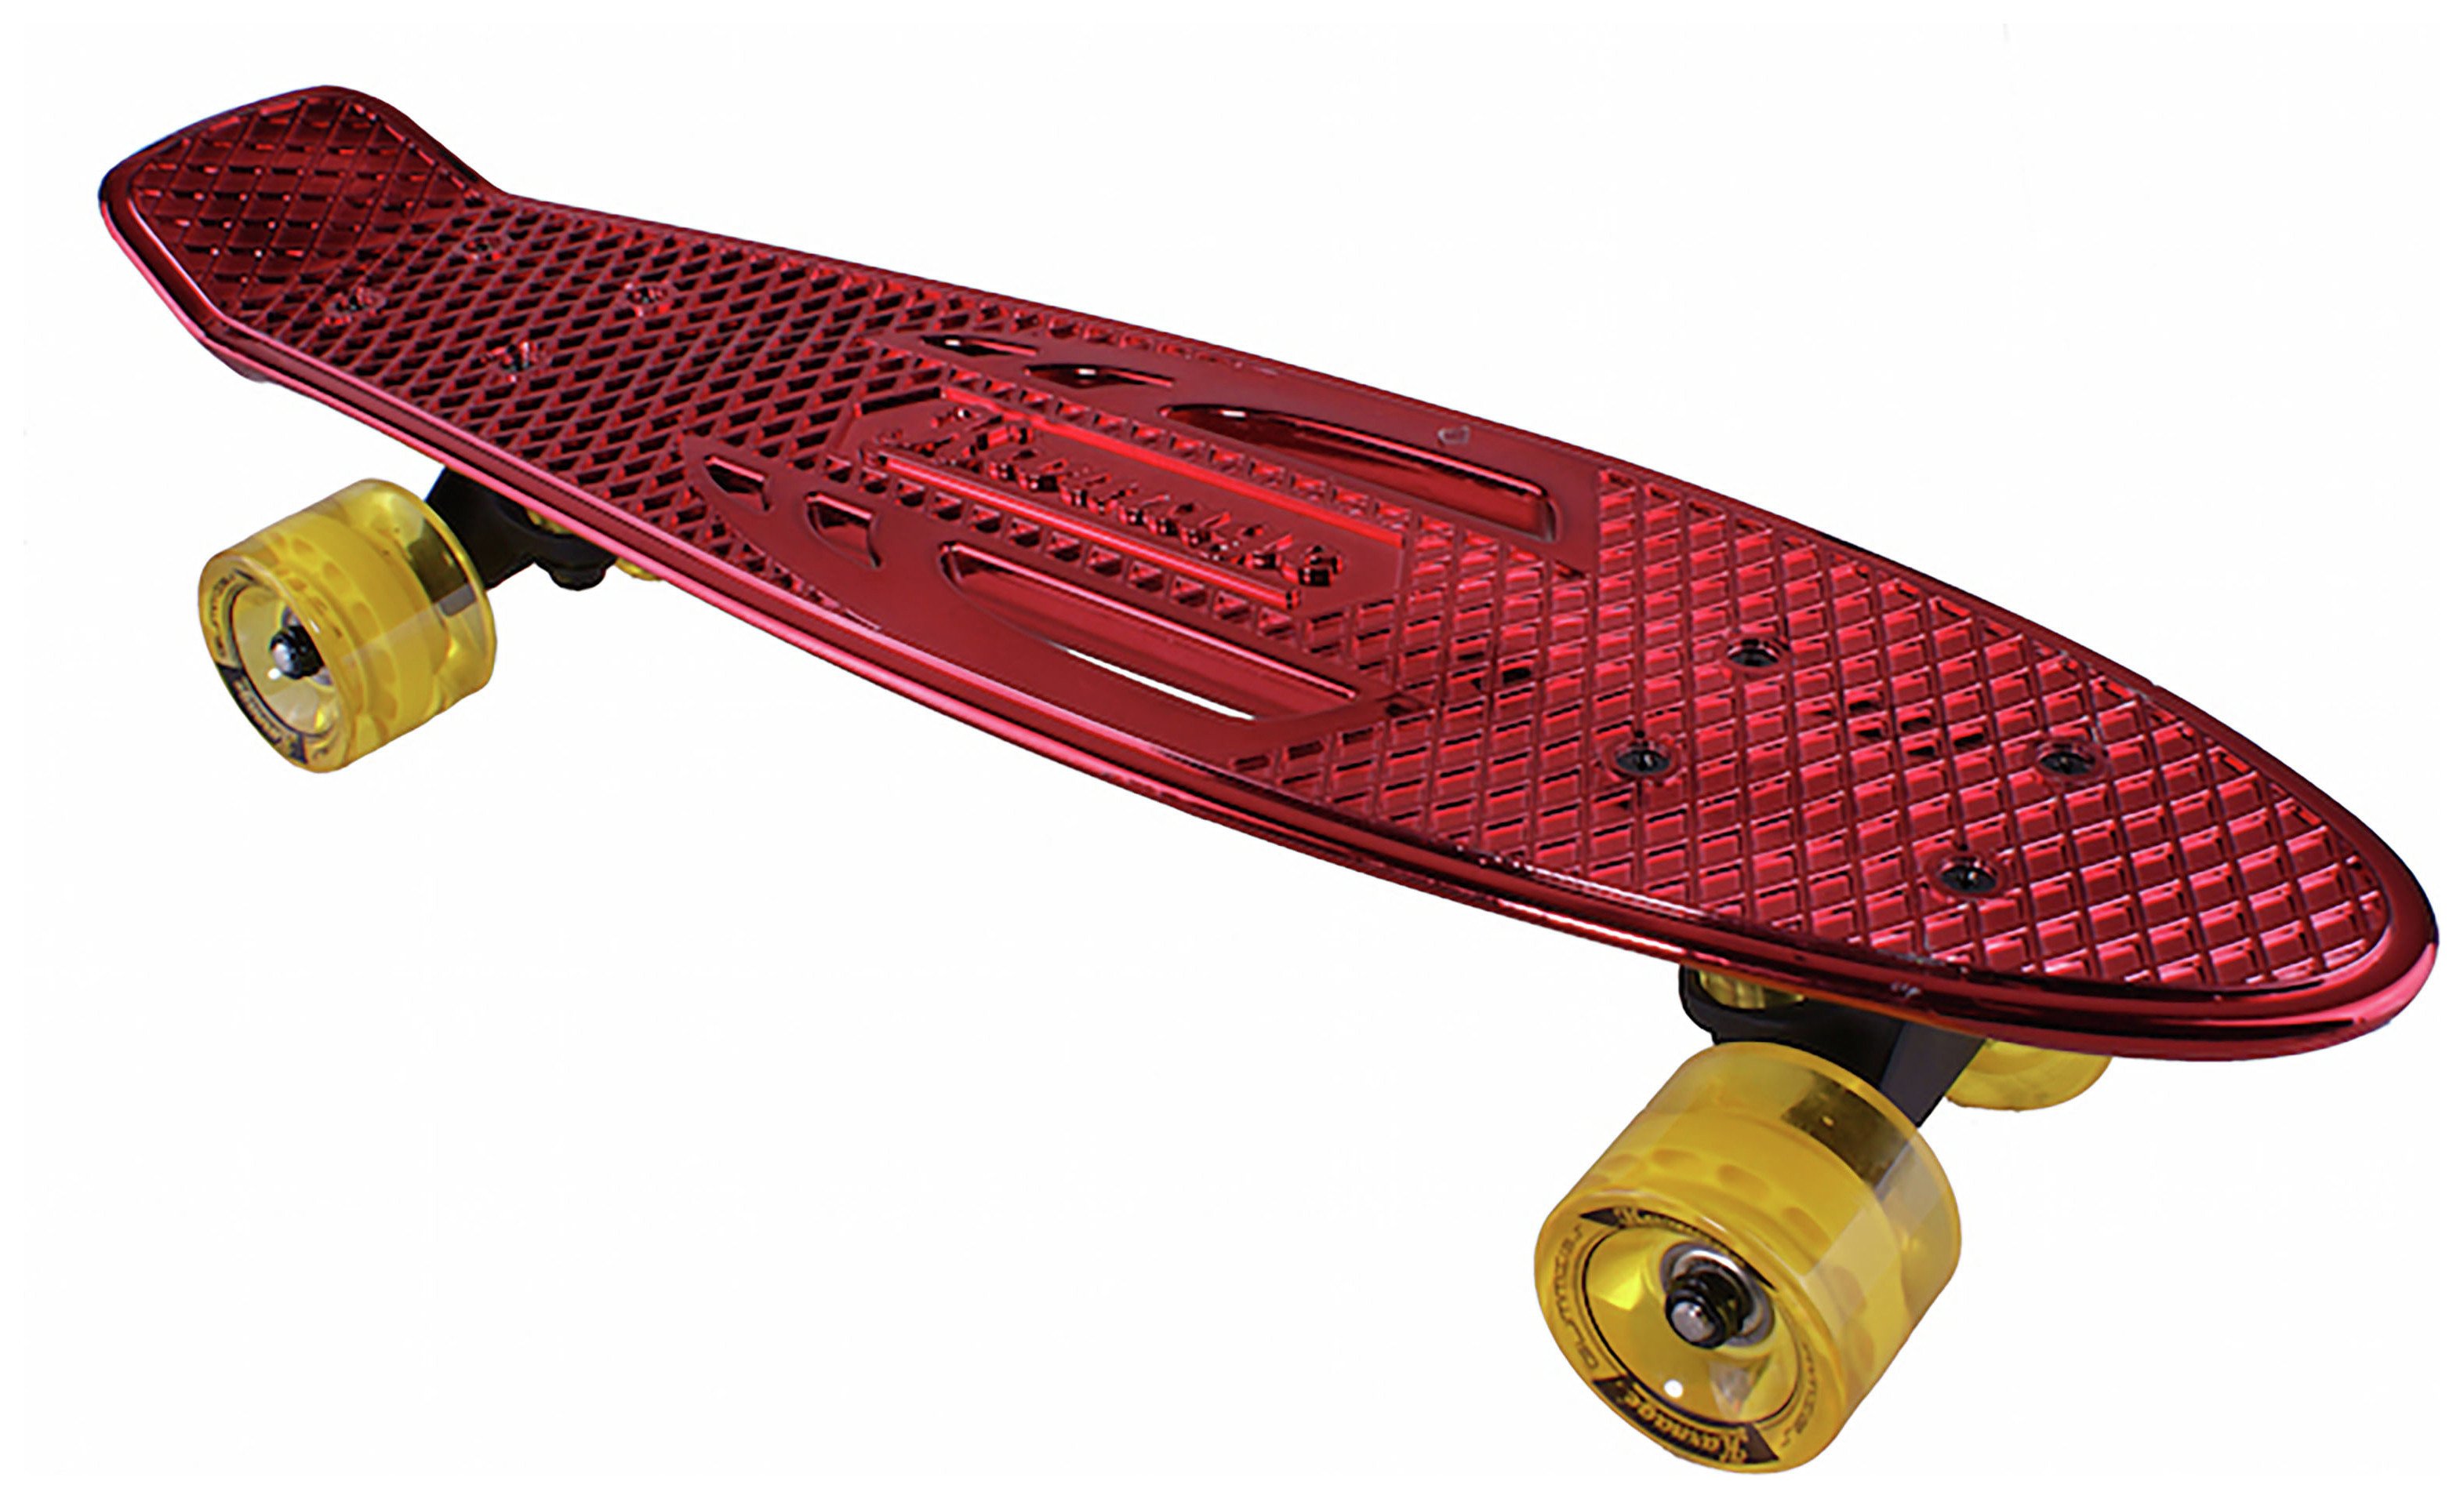 Karnage Retro Skateboard - Chrome and Red